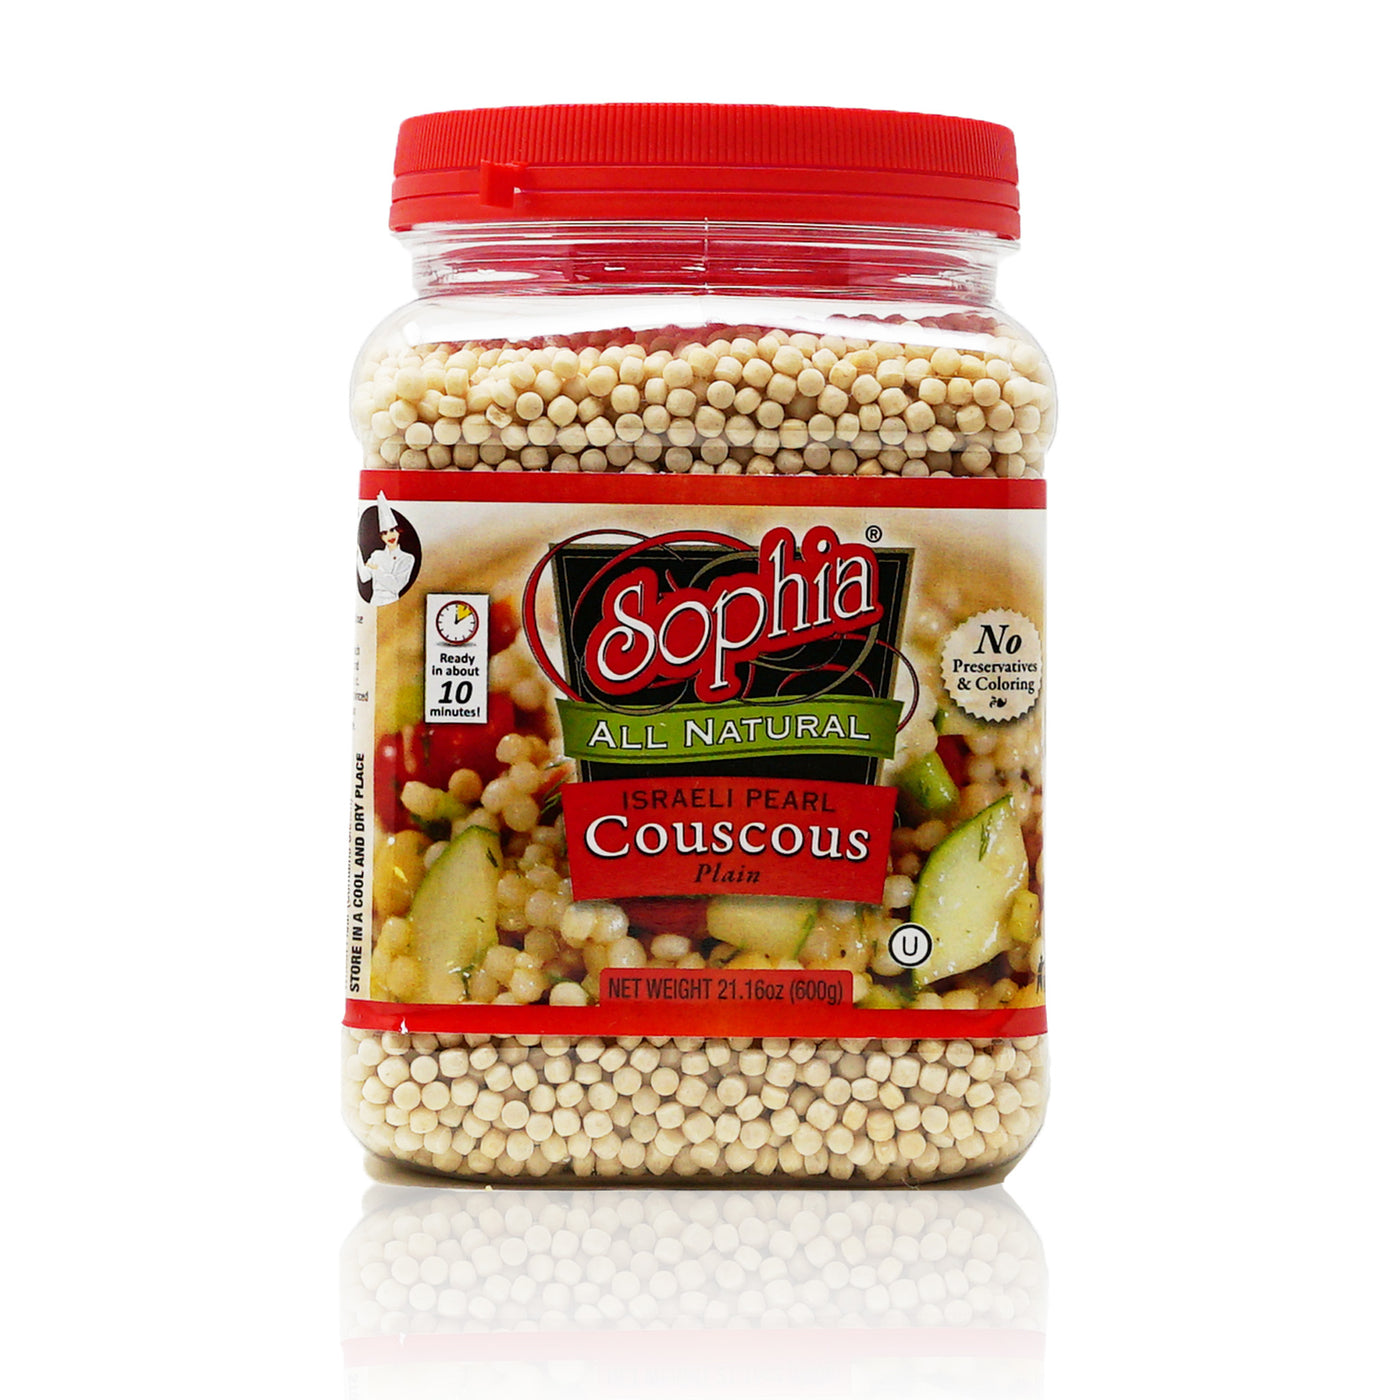 Sophia Couscous - Israeli Toasted Pearl Couscous-Plain